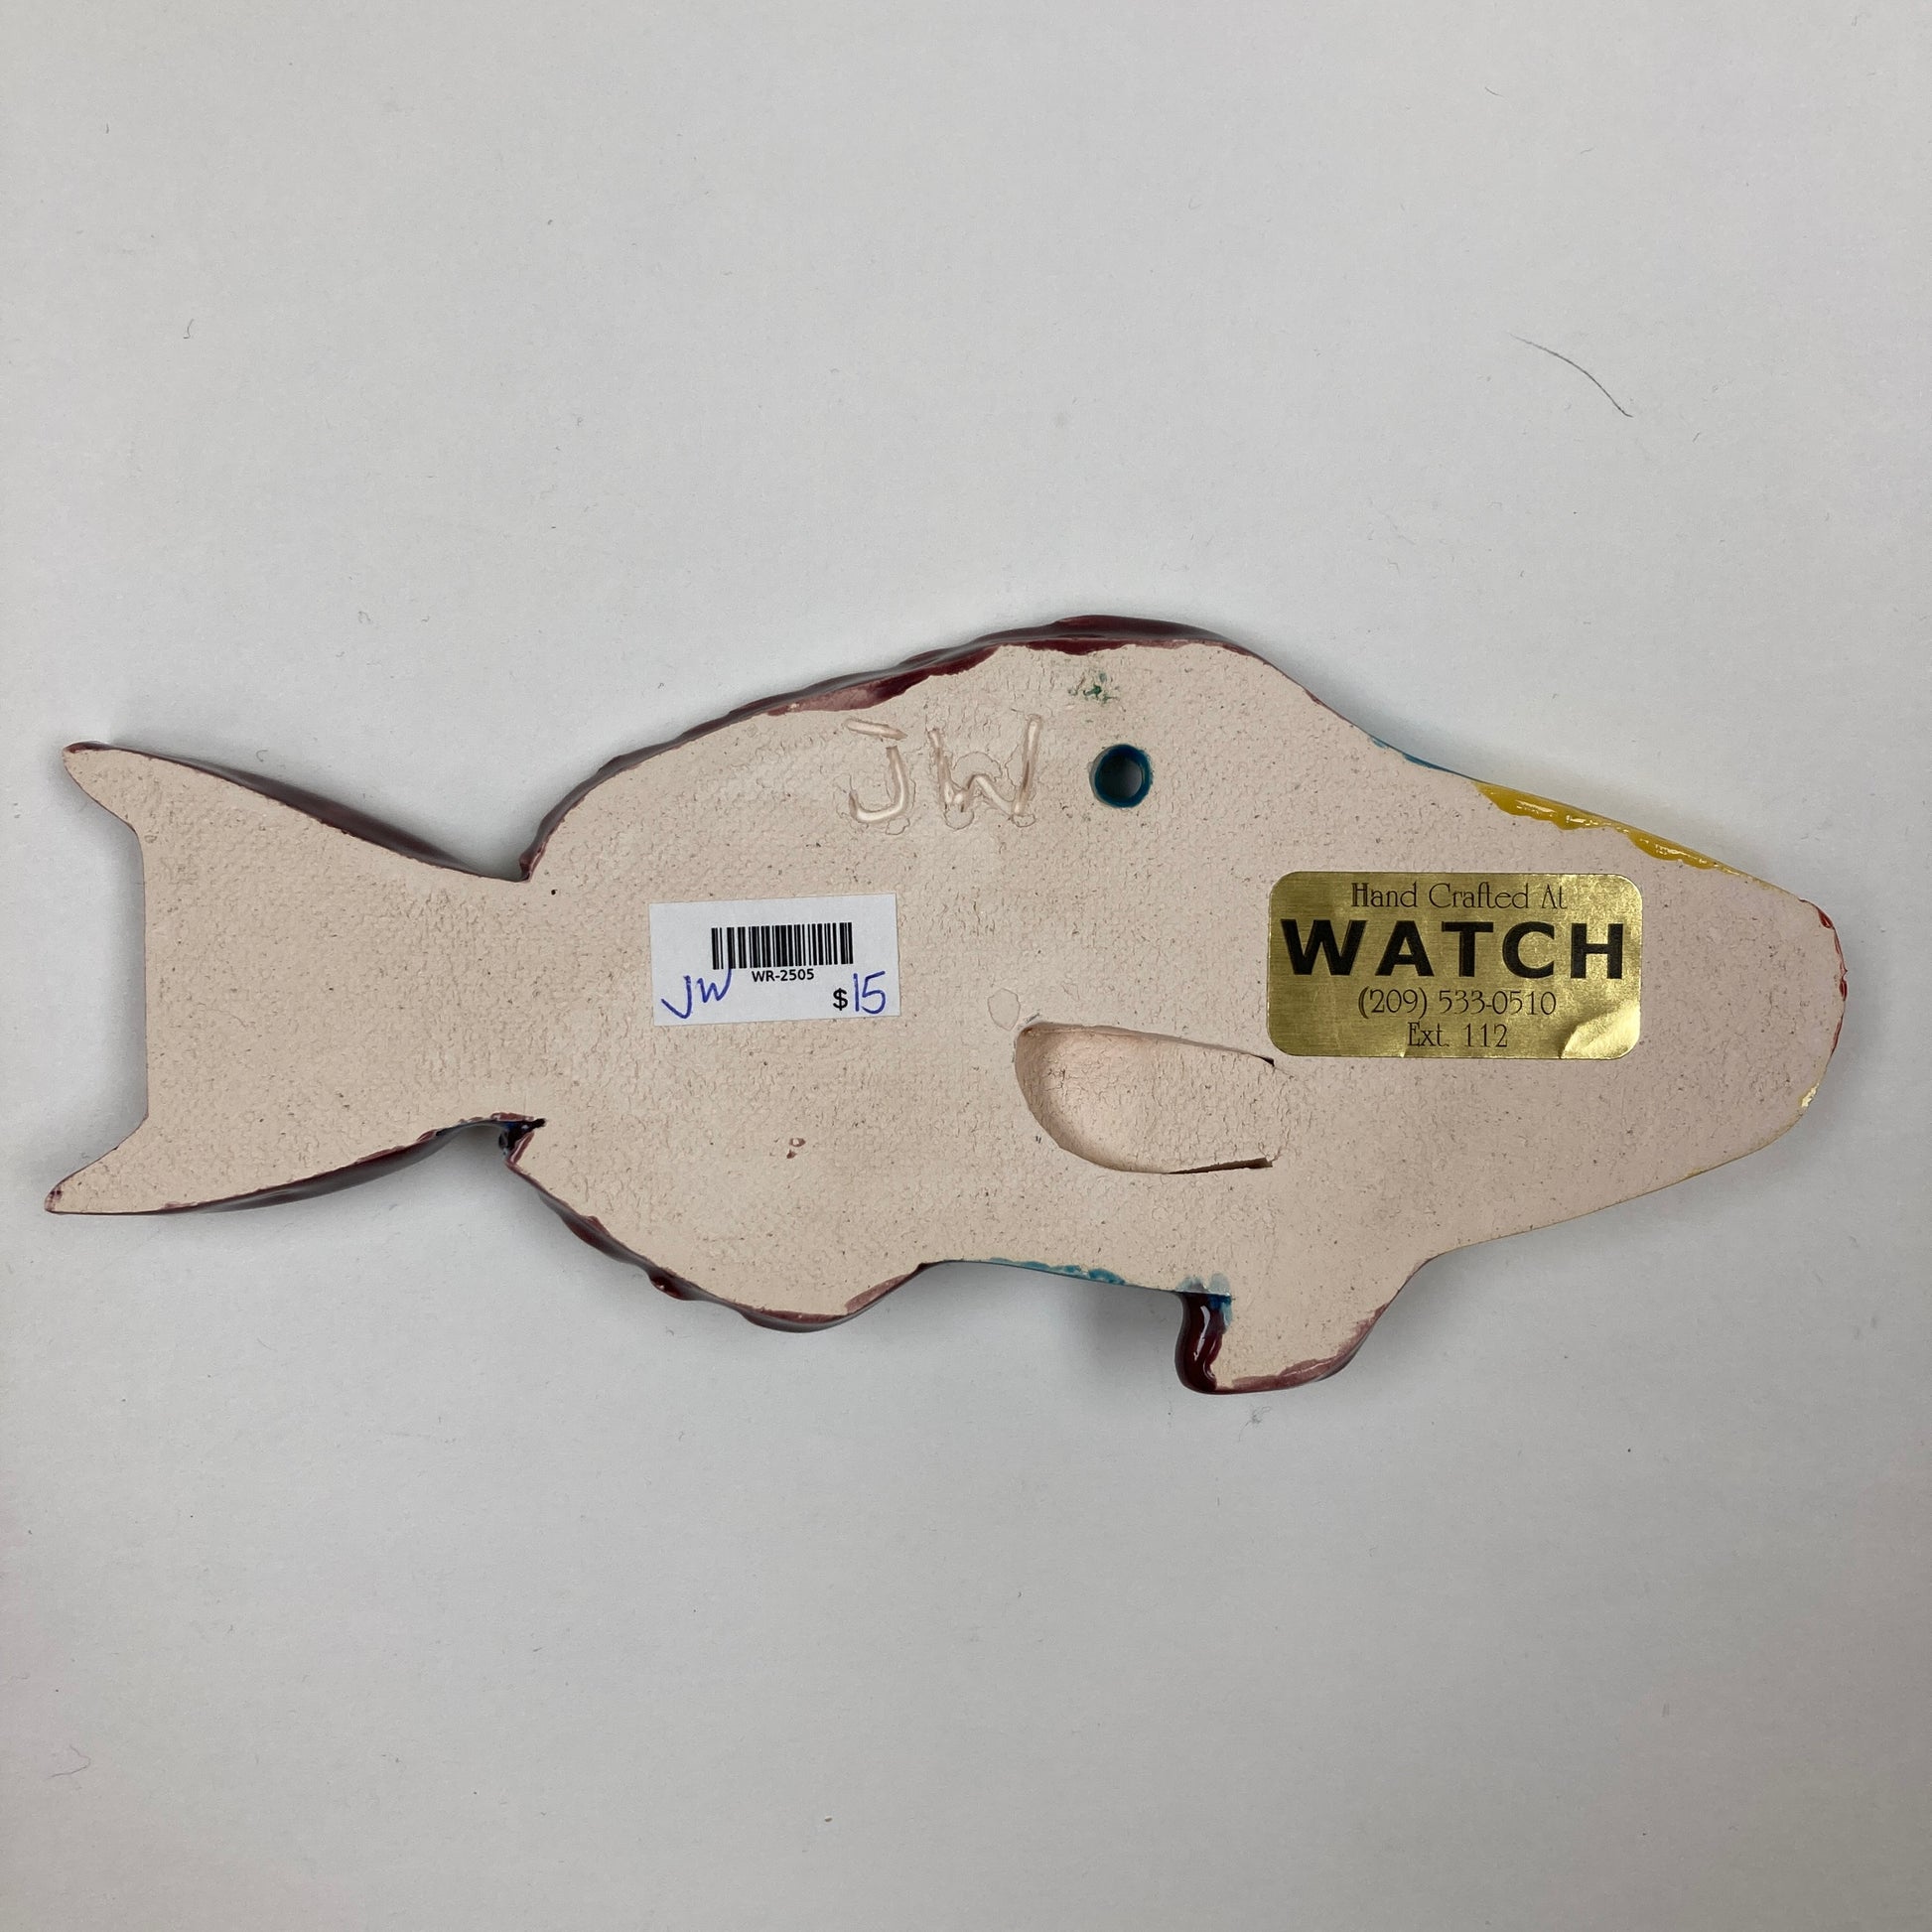 WATCH Resources Art Guild - Ceramic Arts Handmade Clay Crafts Fresh Fish 7.5-inch x 3.5-inch Glazed Fish by Jim Wilbanks